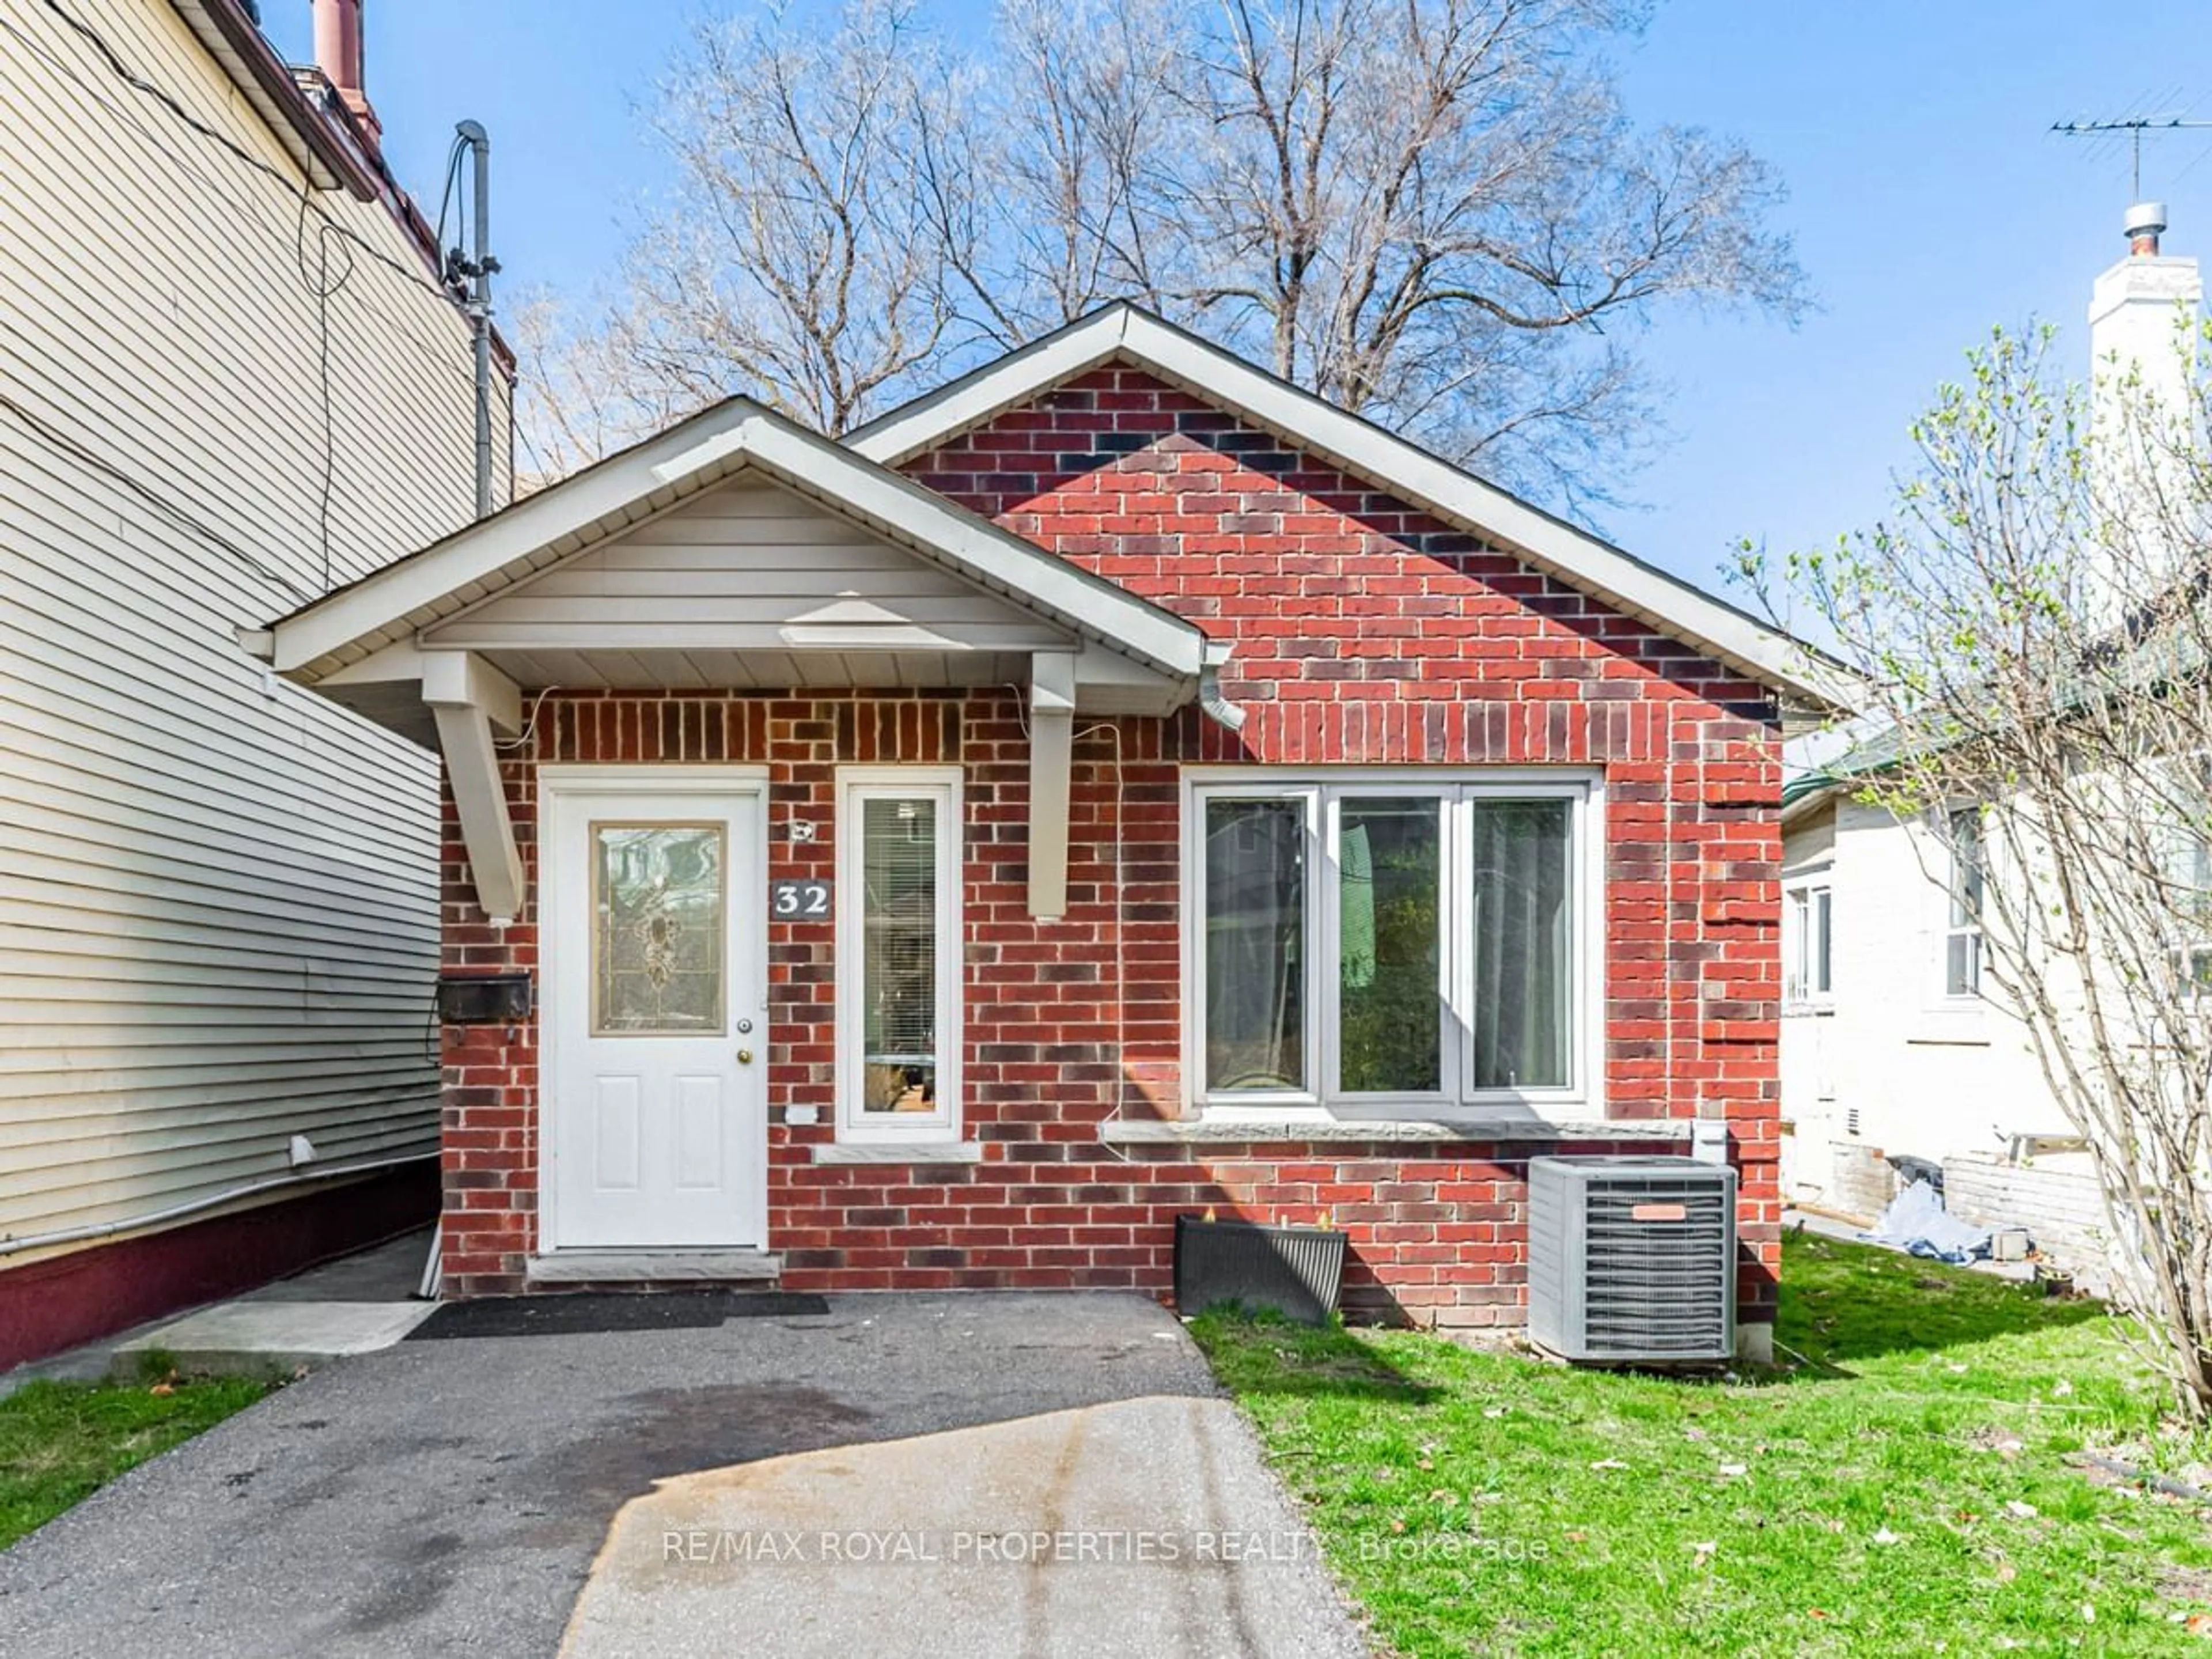 Home with brick exterior material for 32 St Dunstan Dr, Toronto Ontario M1L 2V3